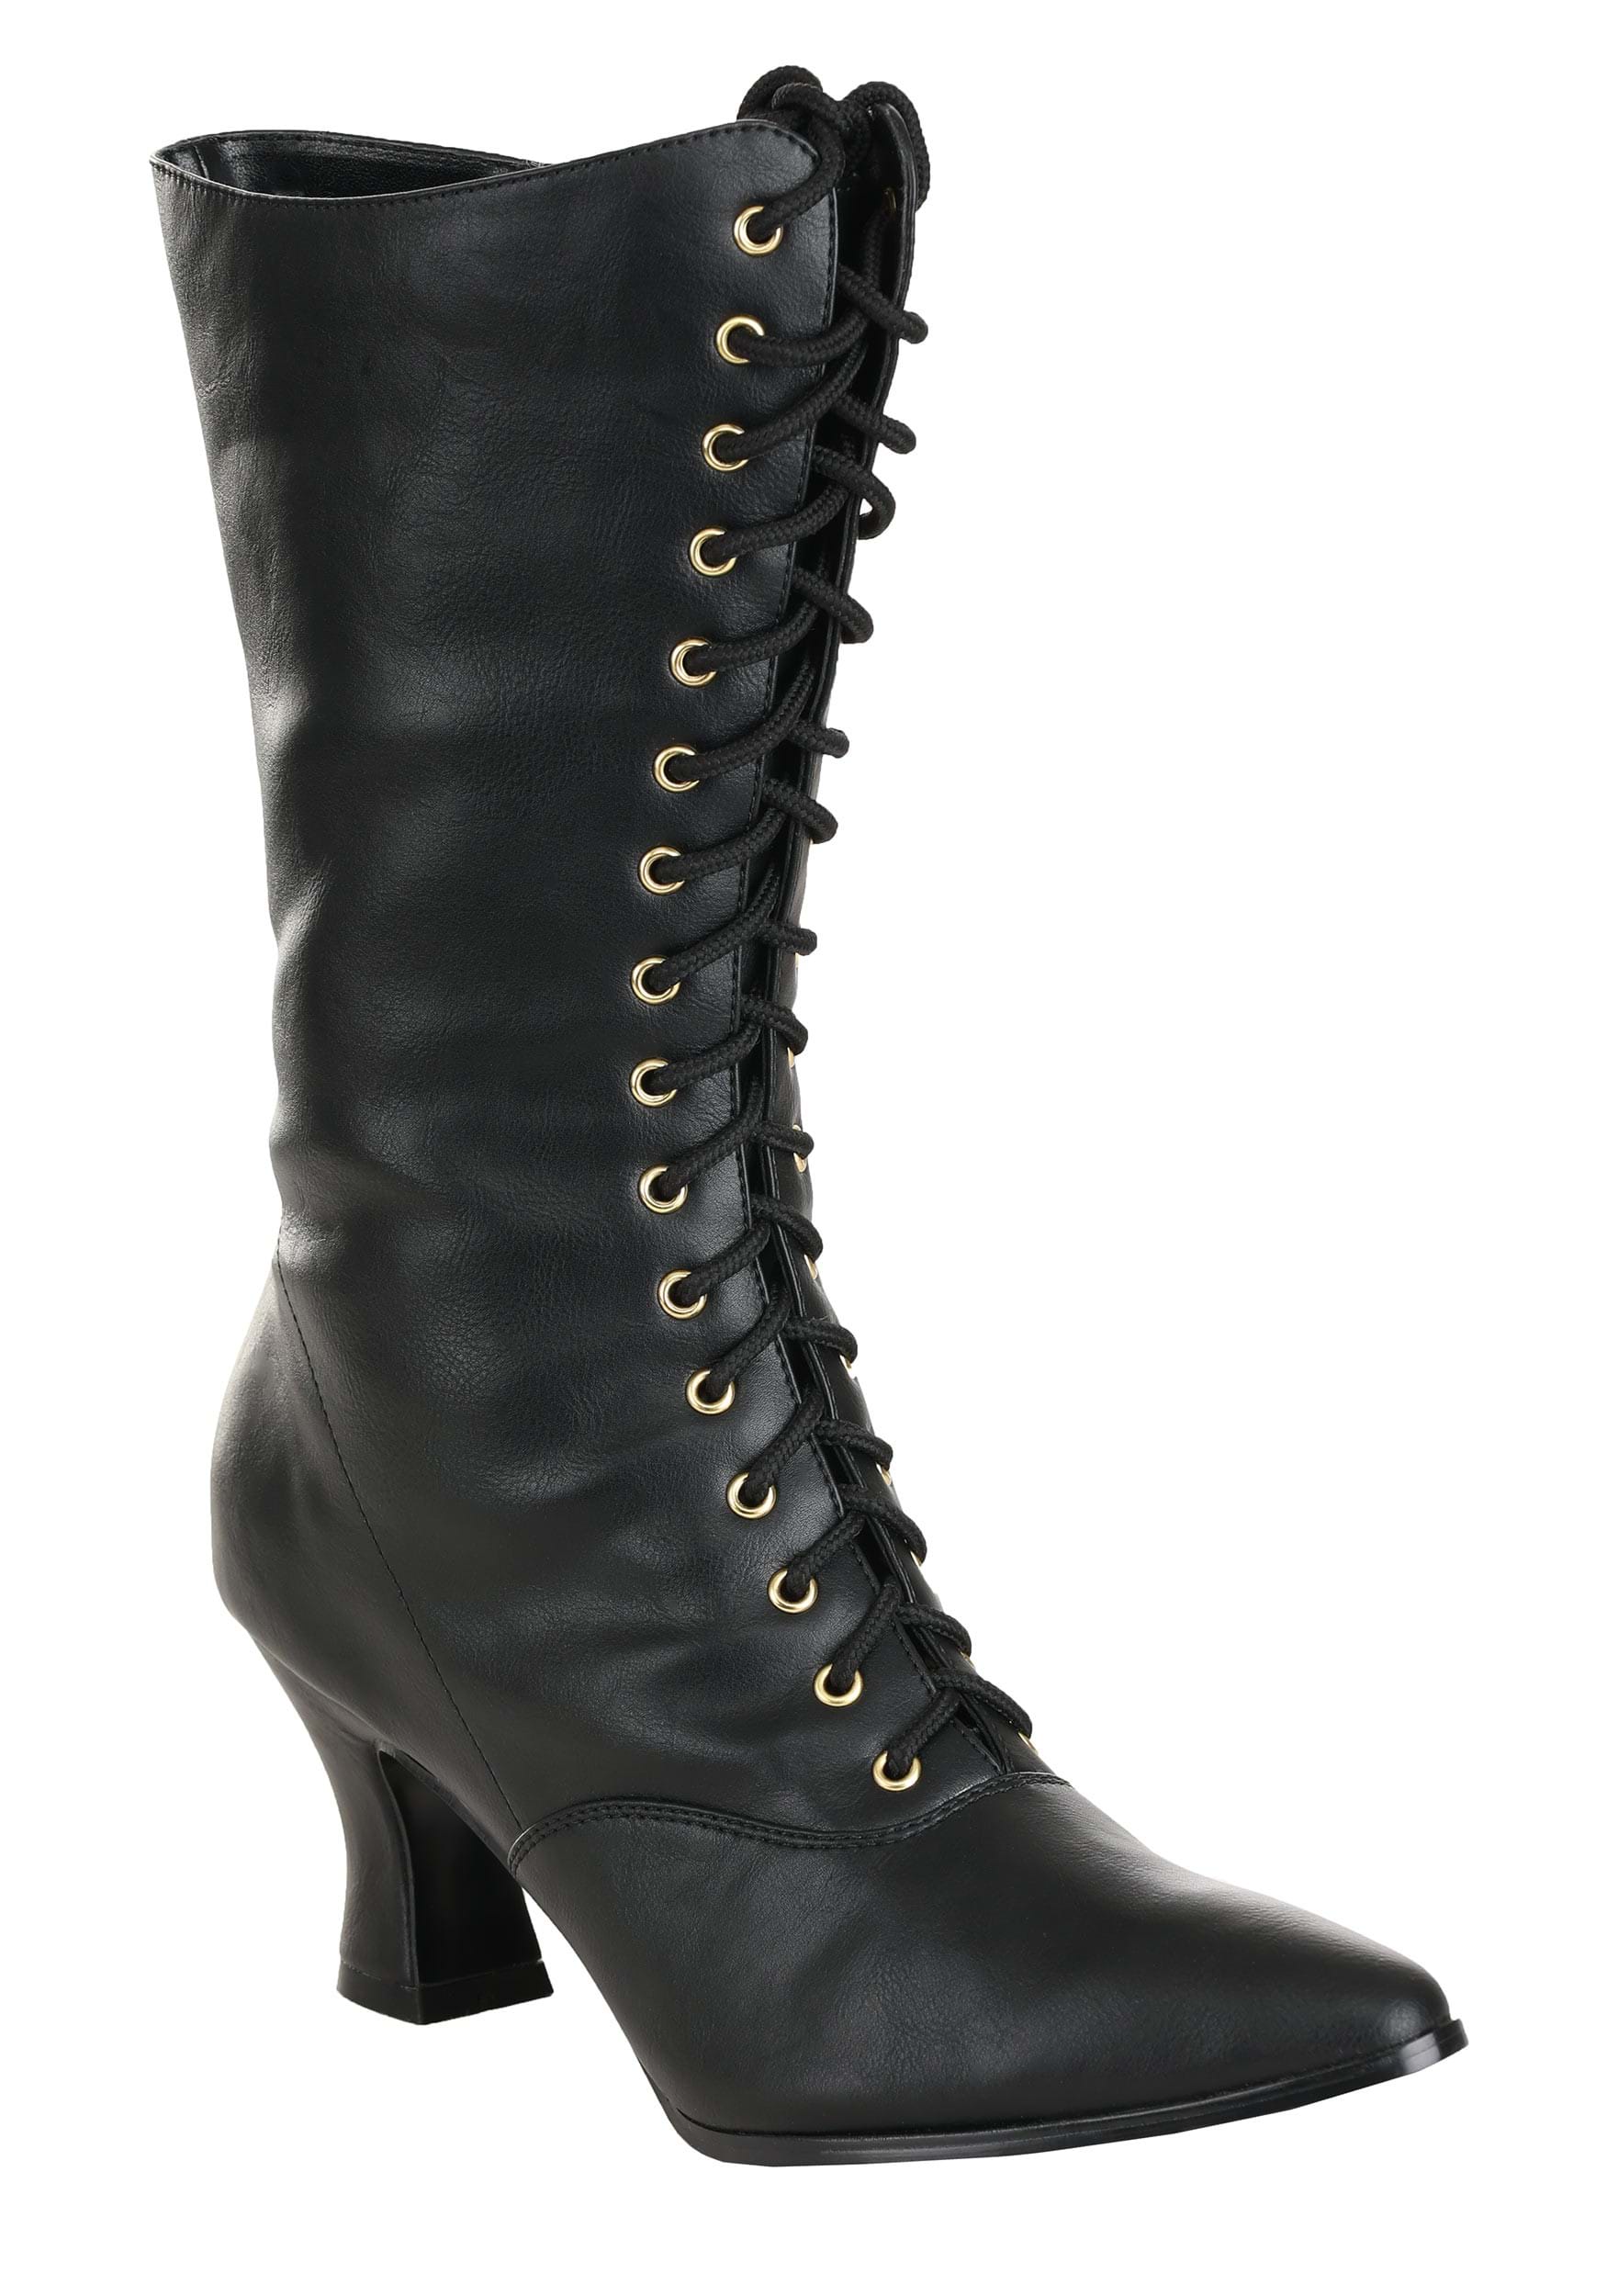 Victorian Women’s Boots